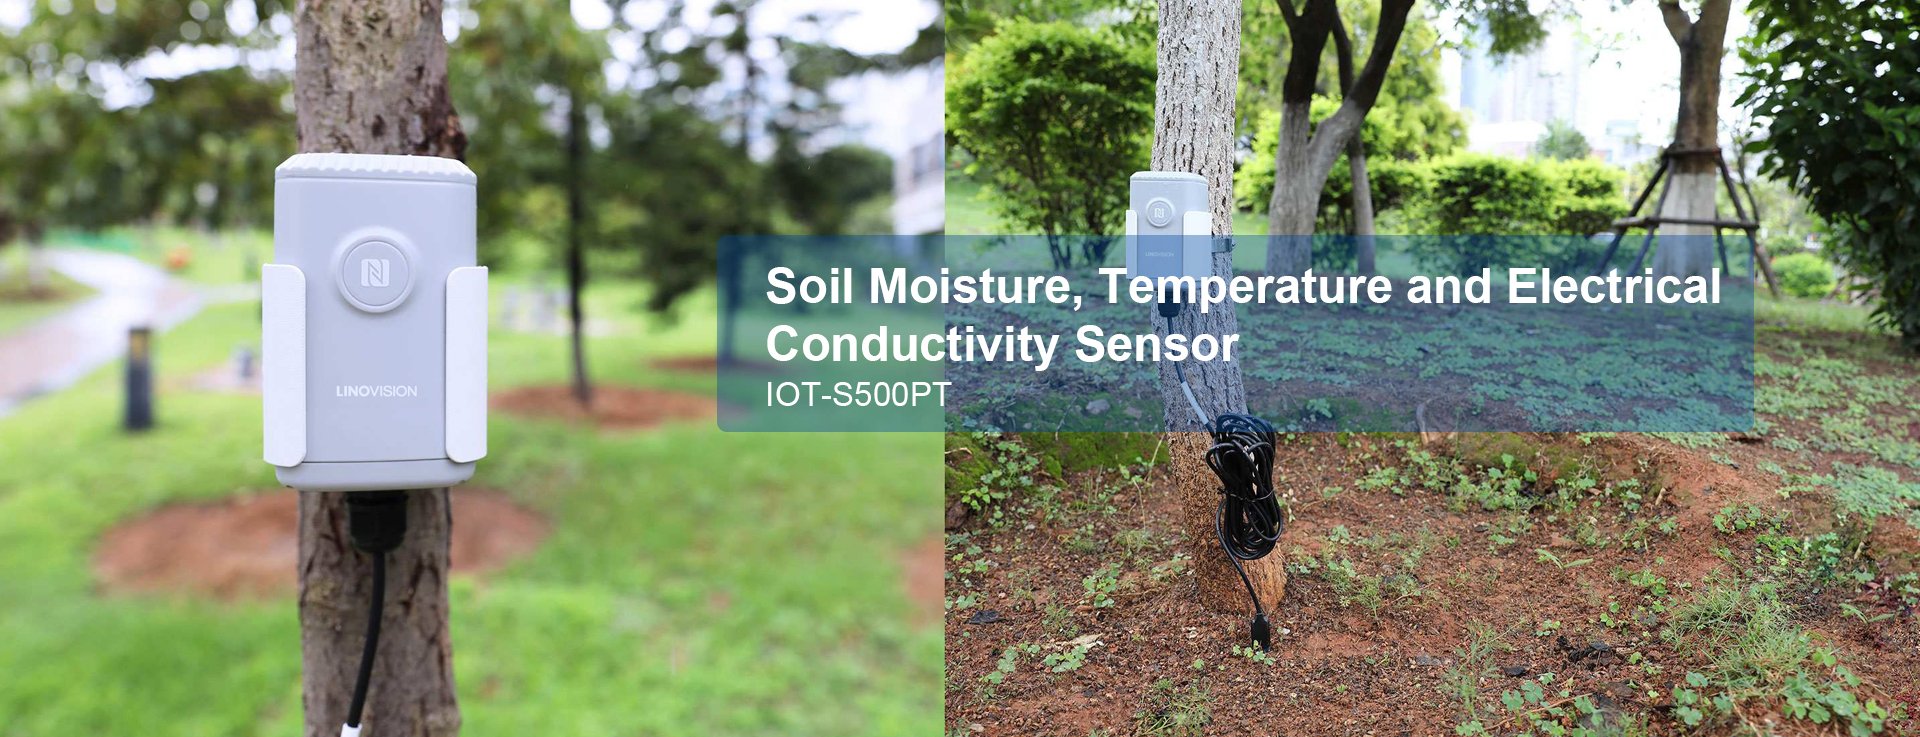  LoRaWAN Wireless Sensor for Soil Moisture, Temperature and Electrical Conductivity Measurement